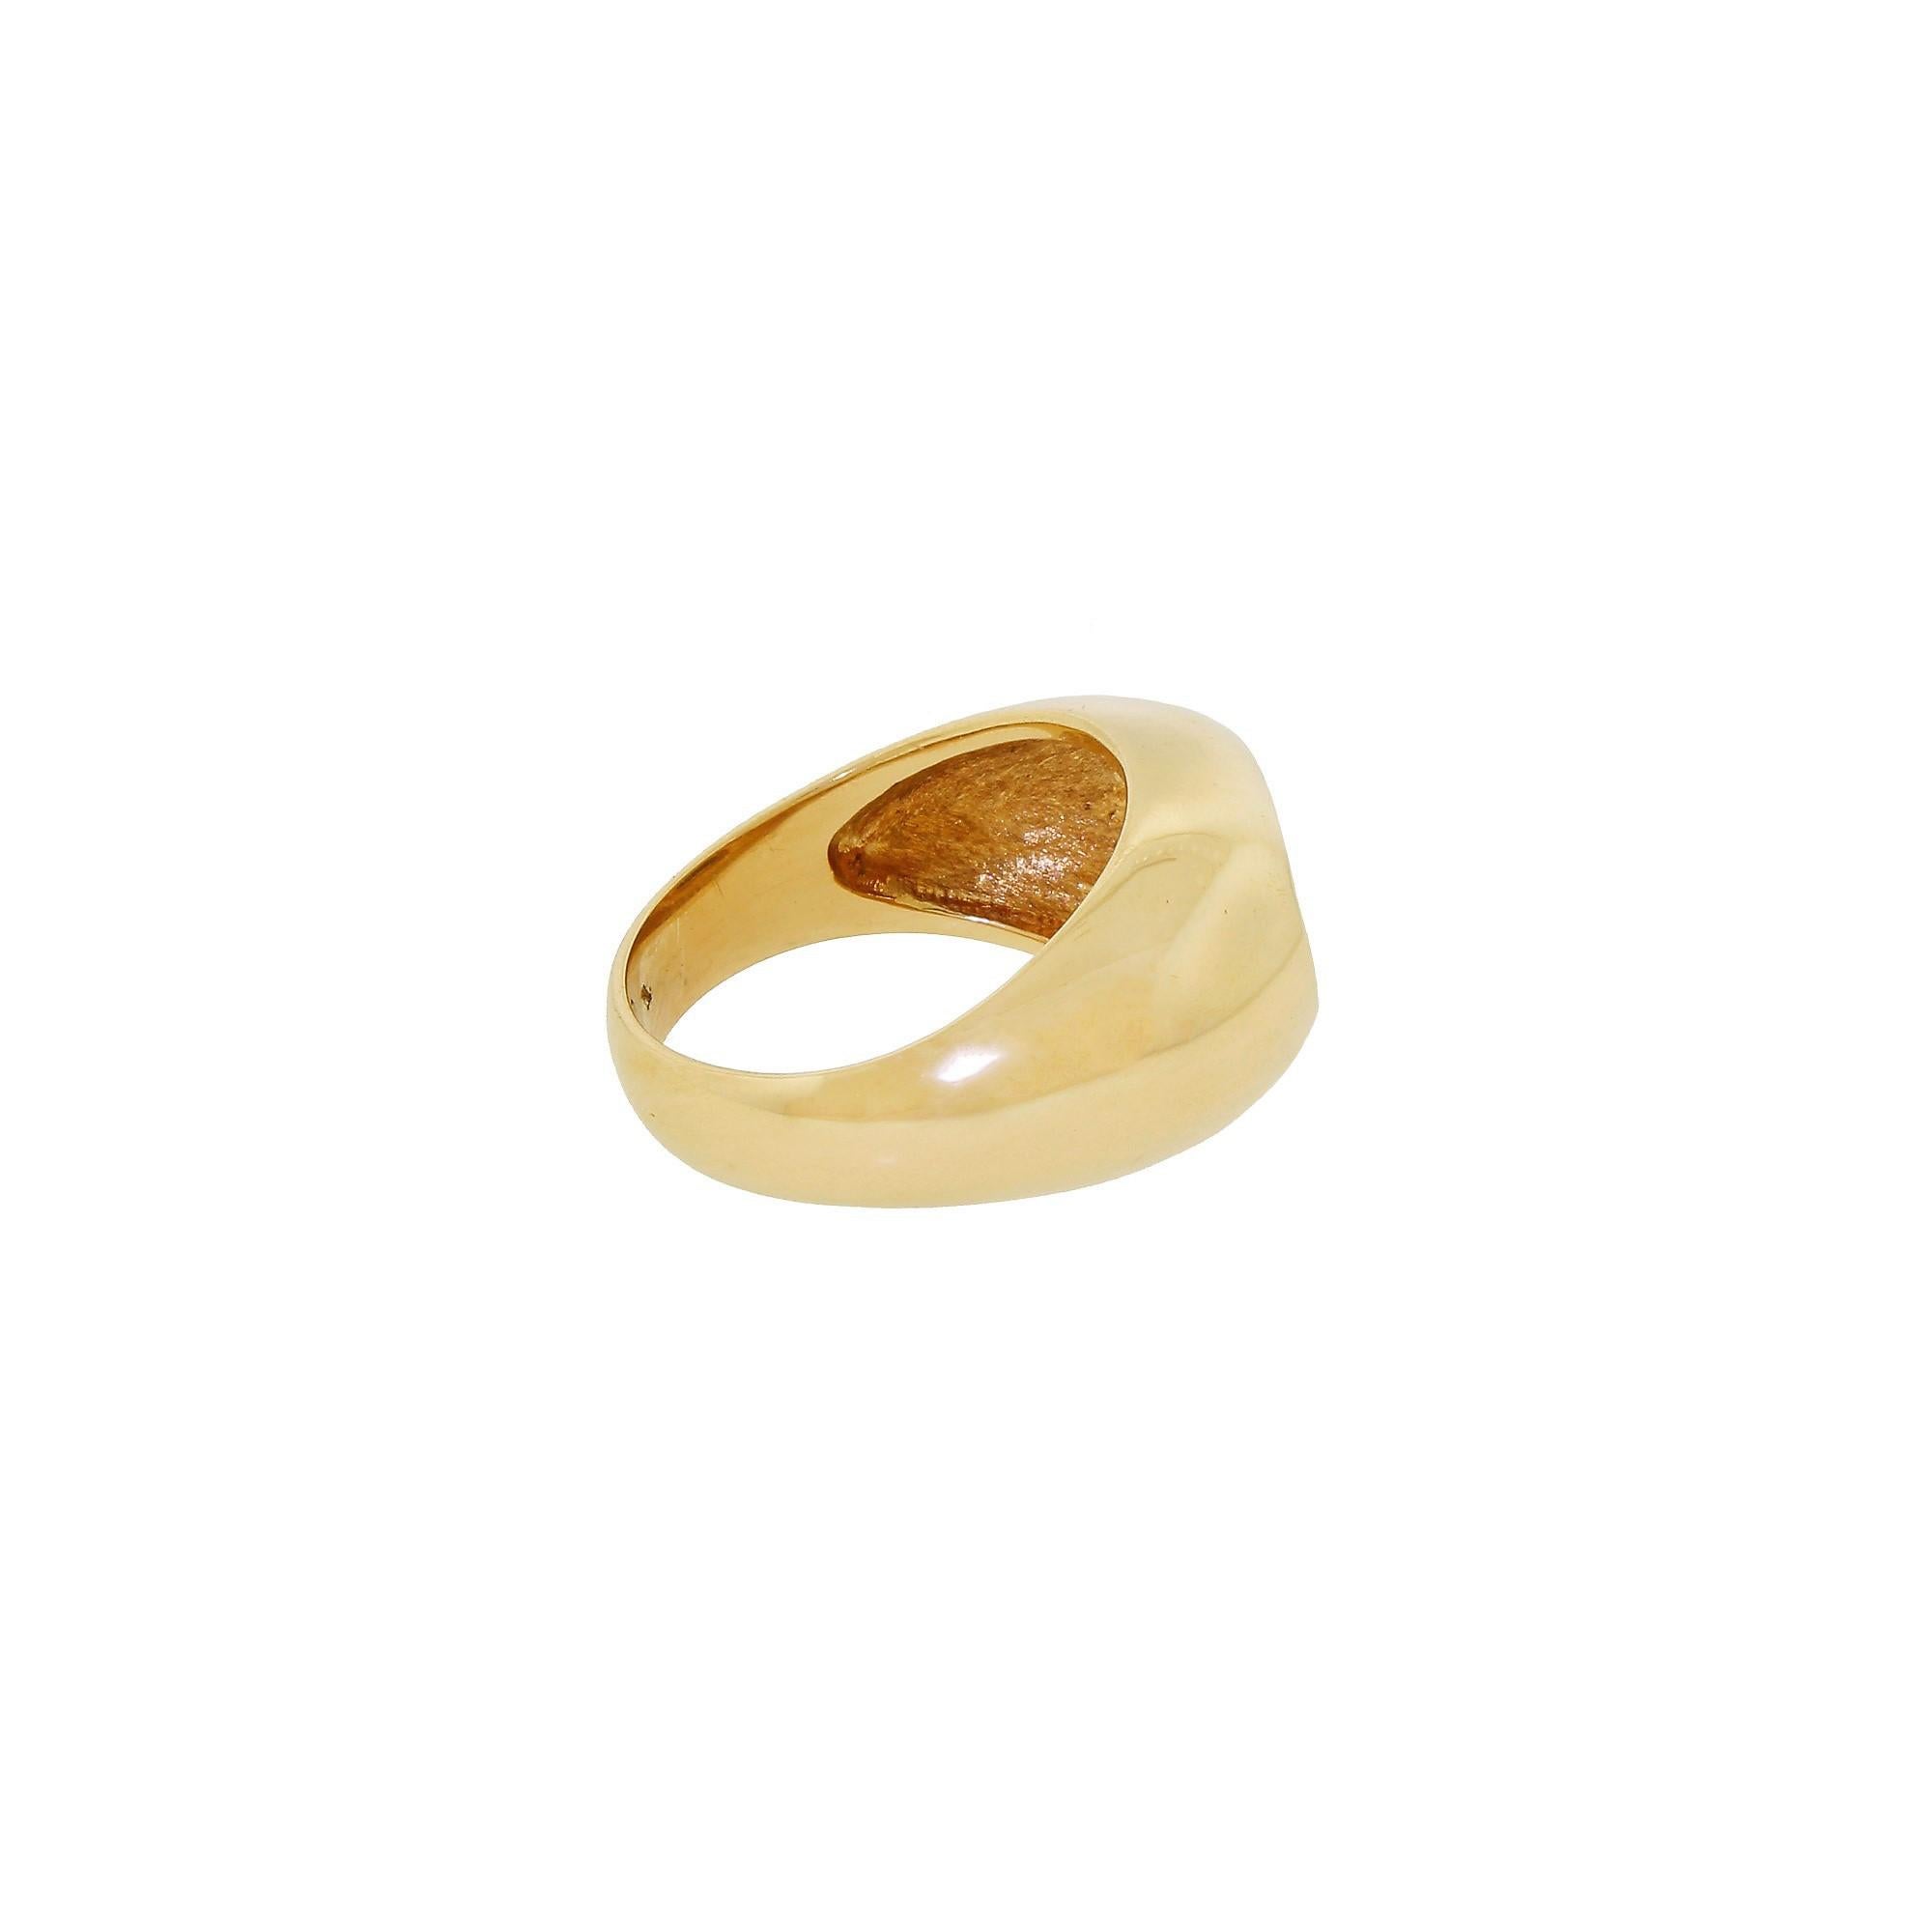 Modern Men's Heavy 14 Karat Gold Ring With Lightning Ridge Black Fire Opal Size 8.75